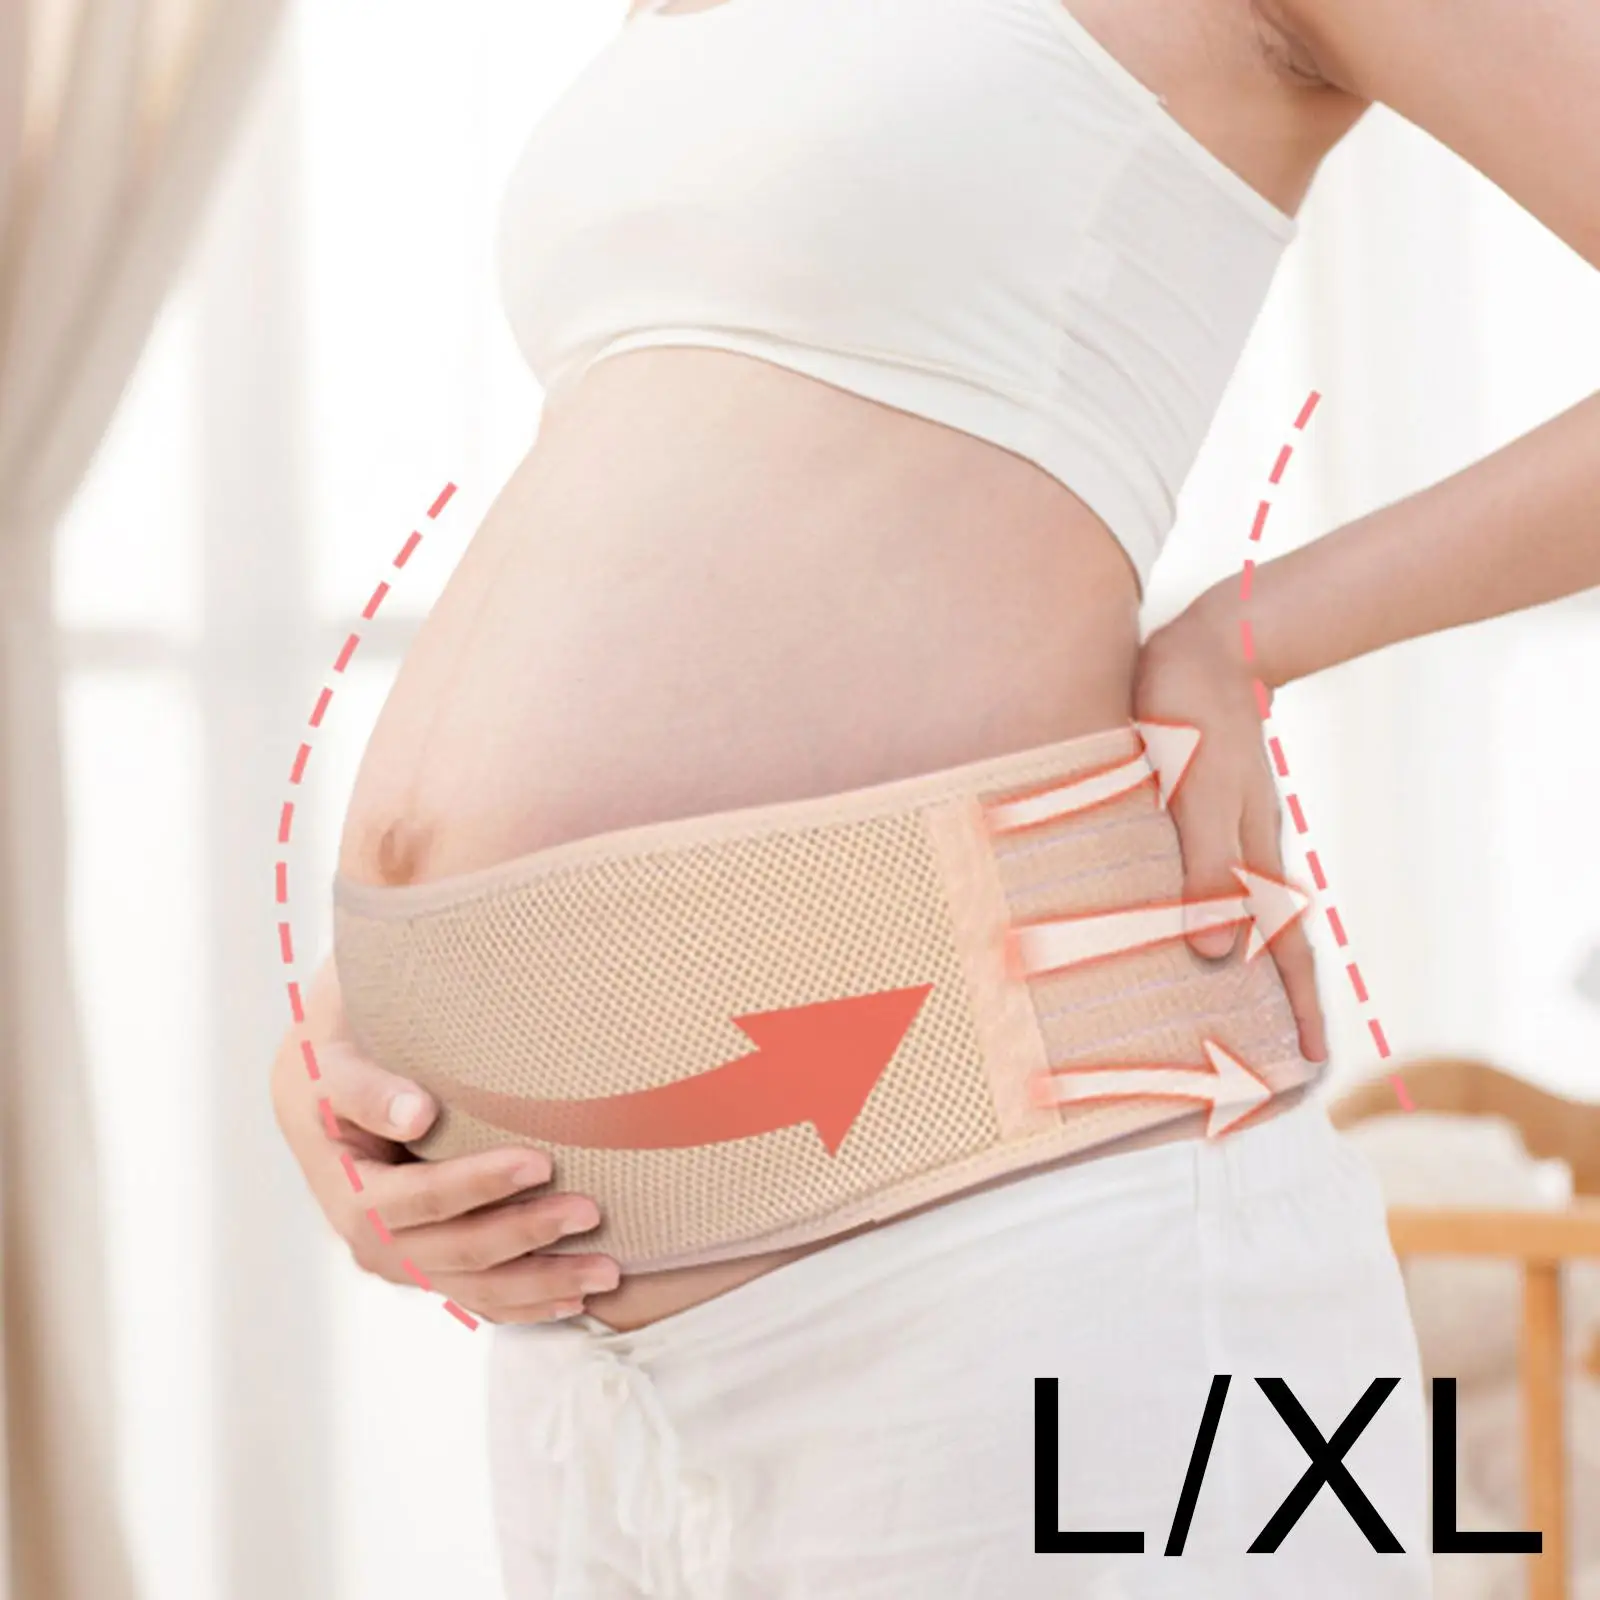 Maternity Belt Lightweight Soft Adjustable Breathable Tummy Band Sling Abdominal Support Belt Belly Back Bump Brace Strap